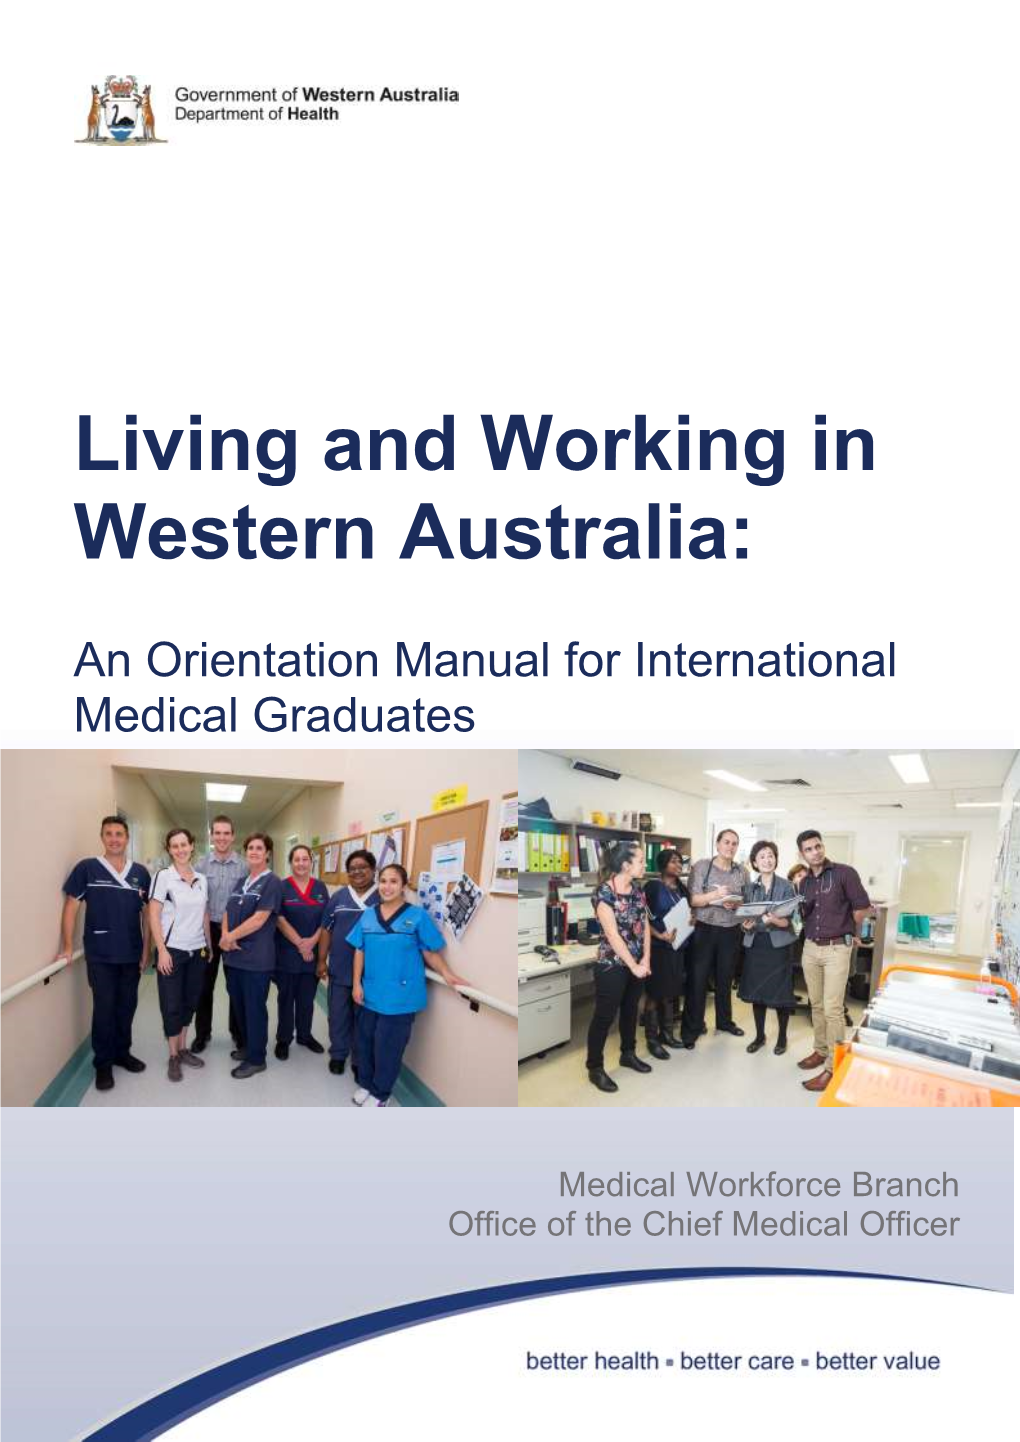 An Orientation Manual for International Medical Graduates